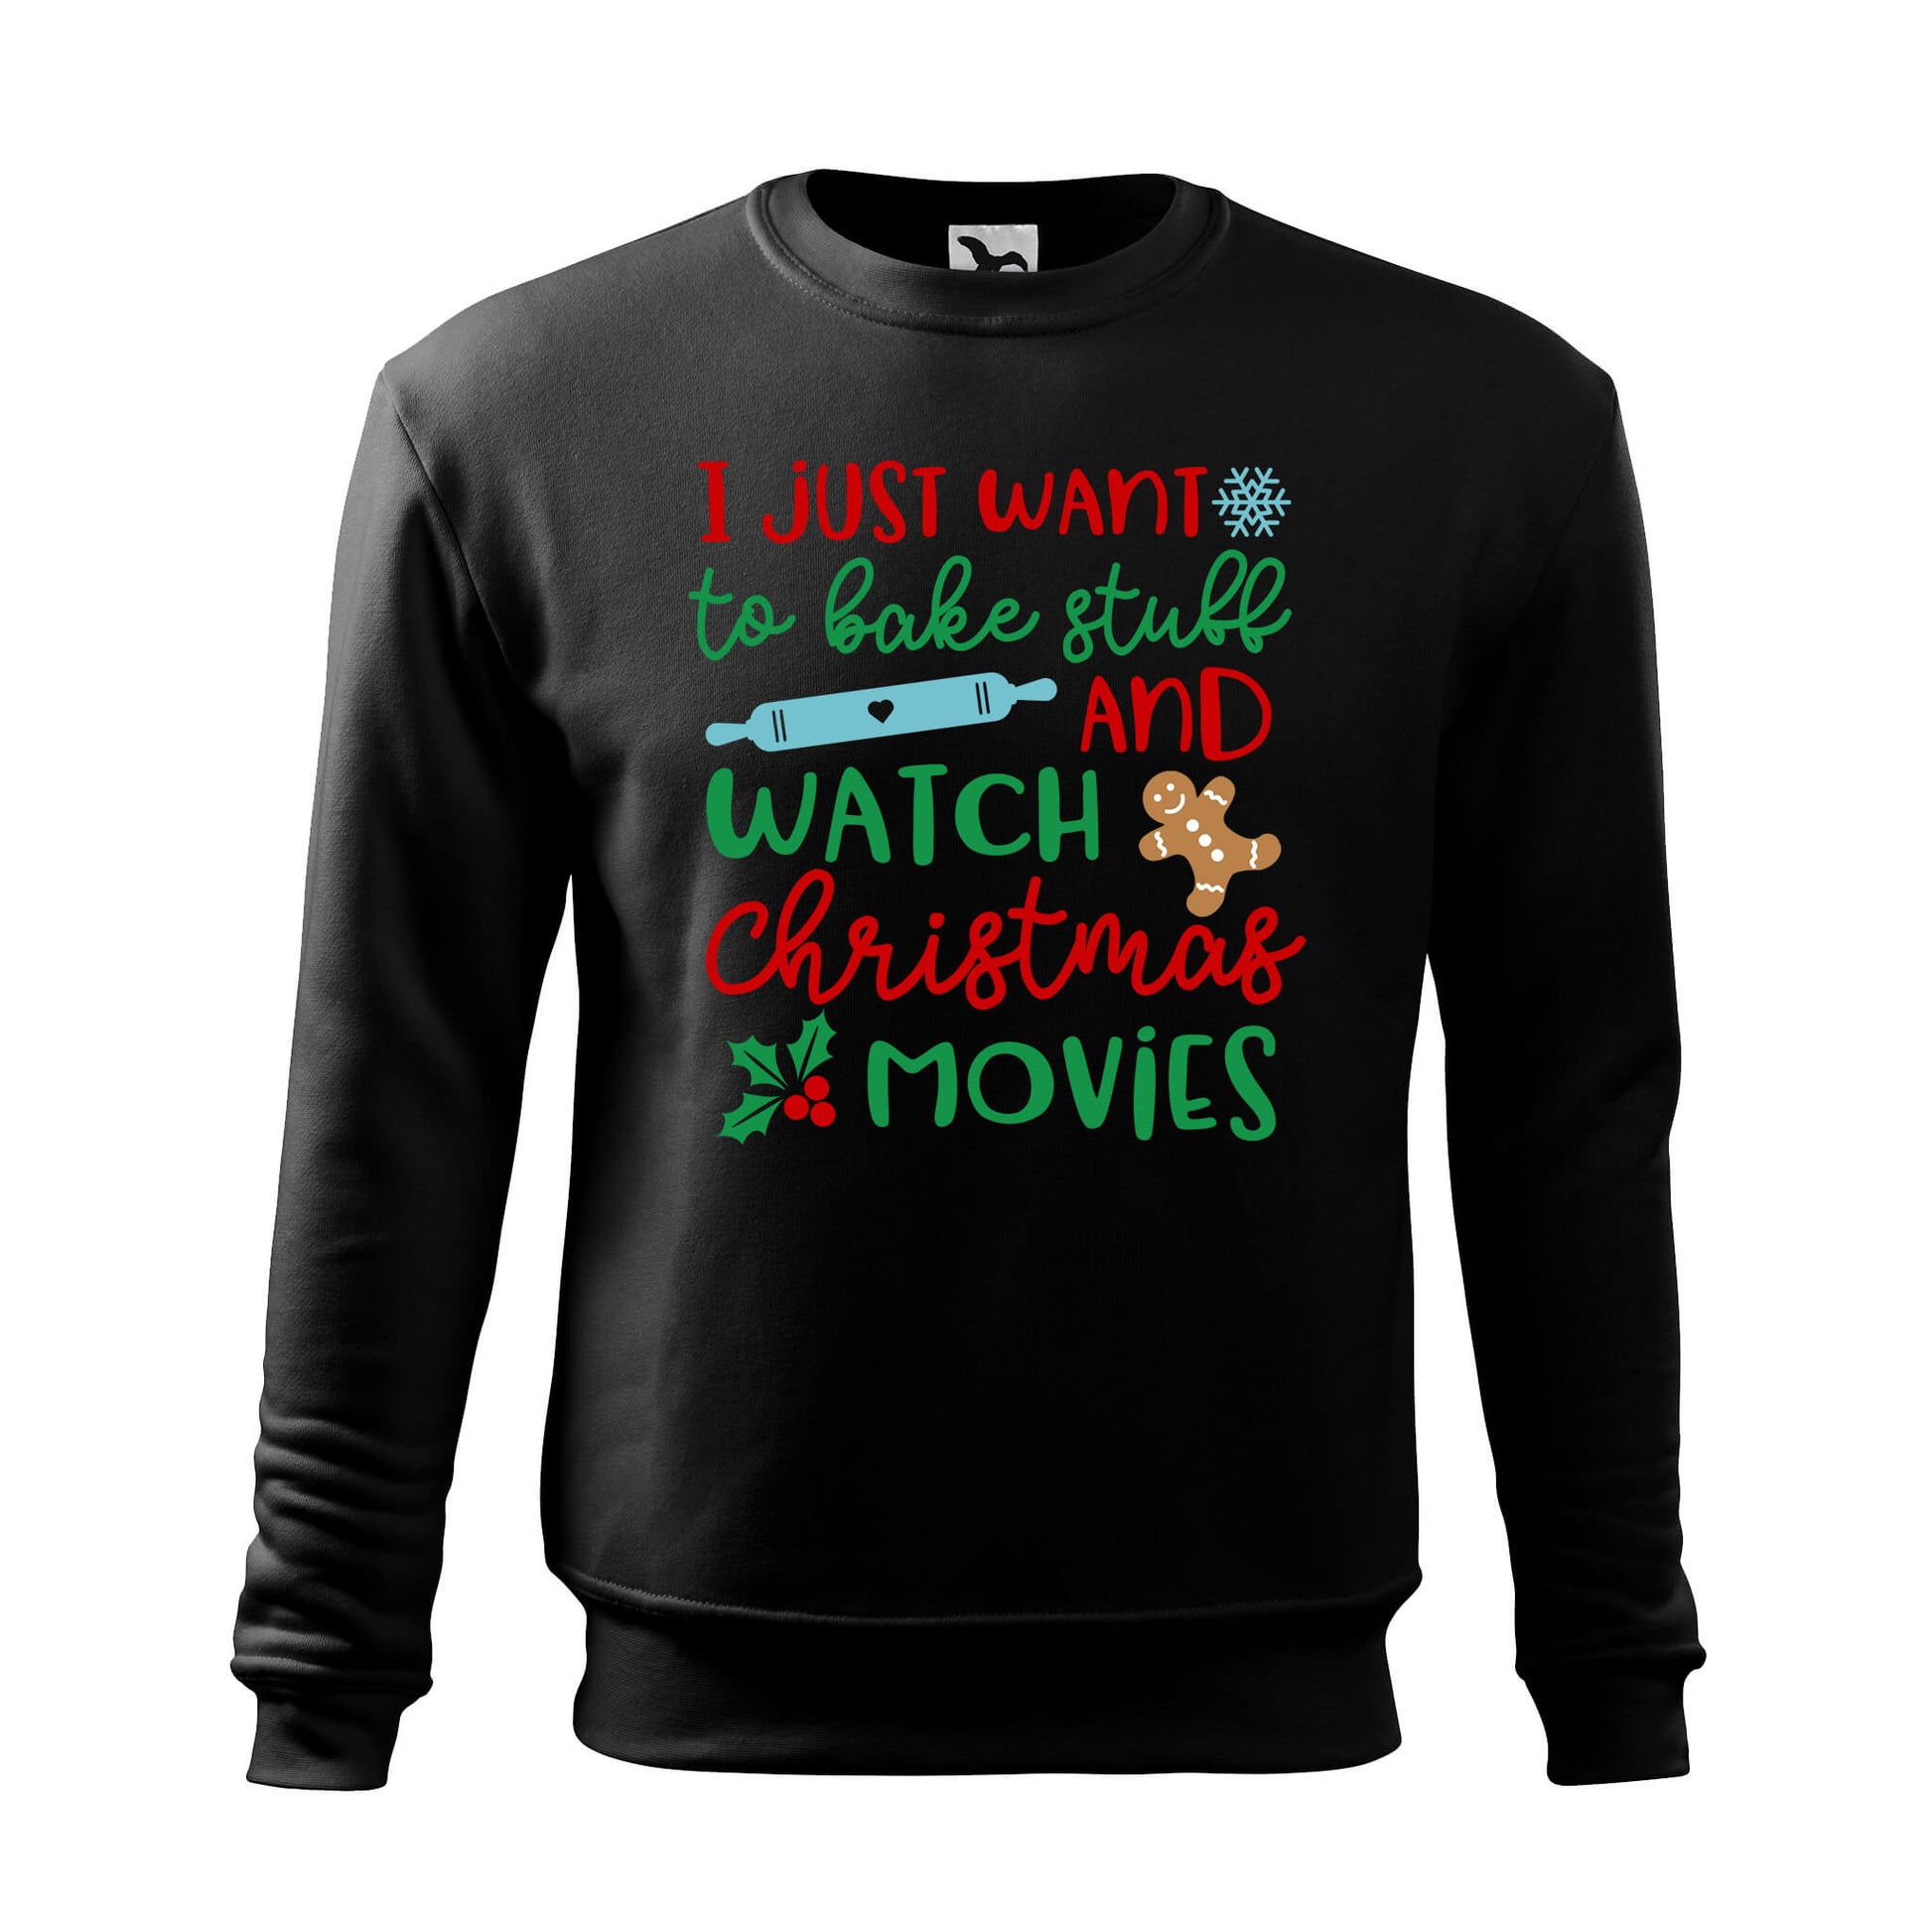 Bake stuff watch christmas movies sweatshirt - rvdesignprint